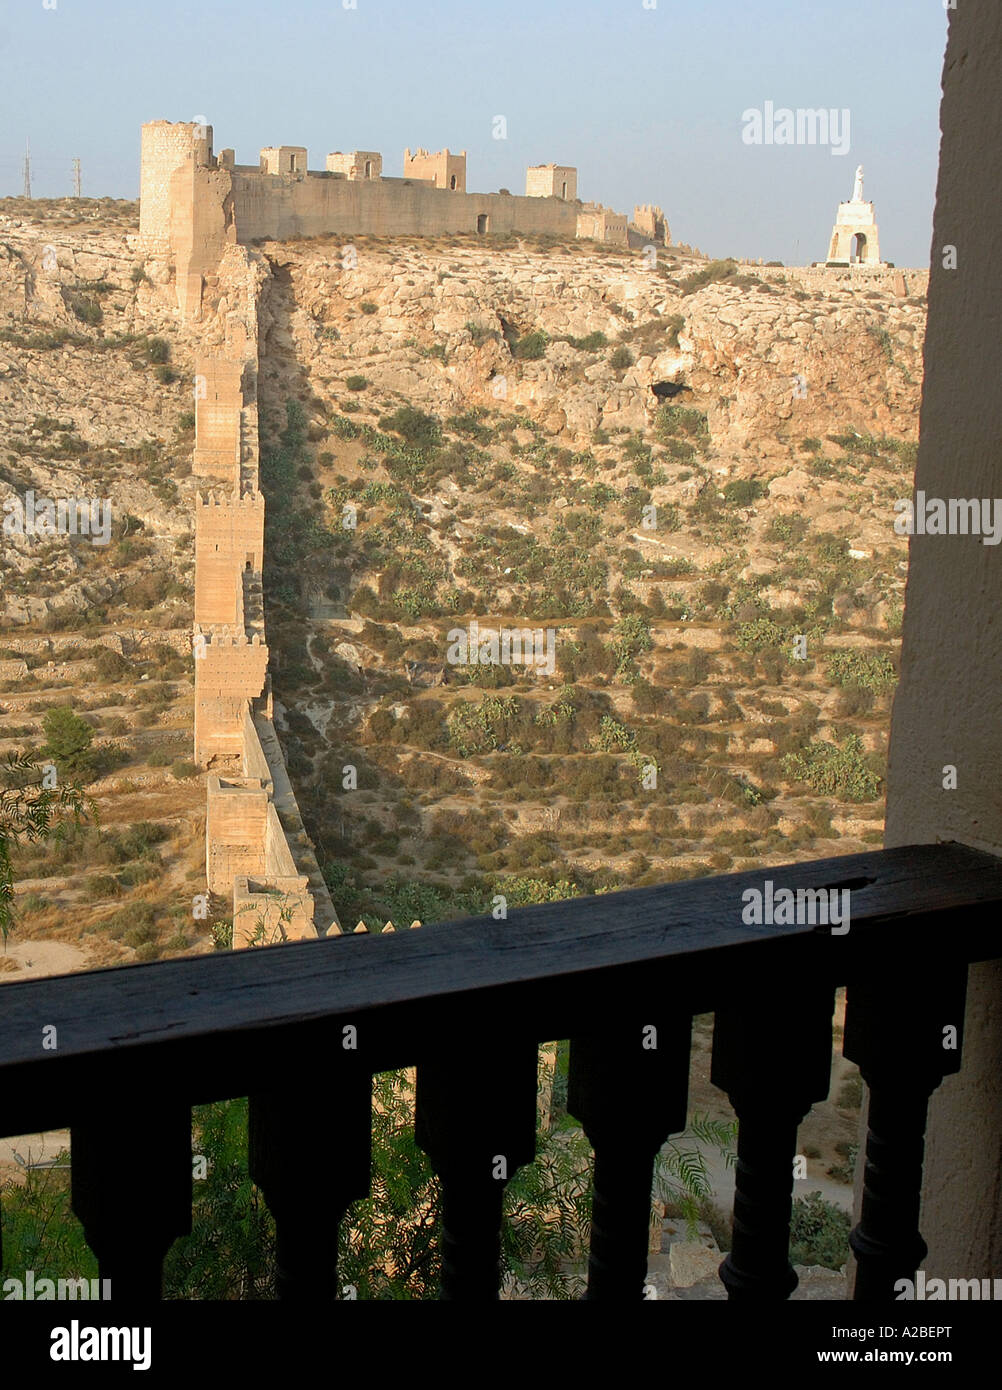 Panoramablick auf Alcazaba Festung Wände & Christus-Statue Almería Almeria Andalusien Andalusien España Spanien Iberia Europa Stockfoto